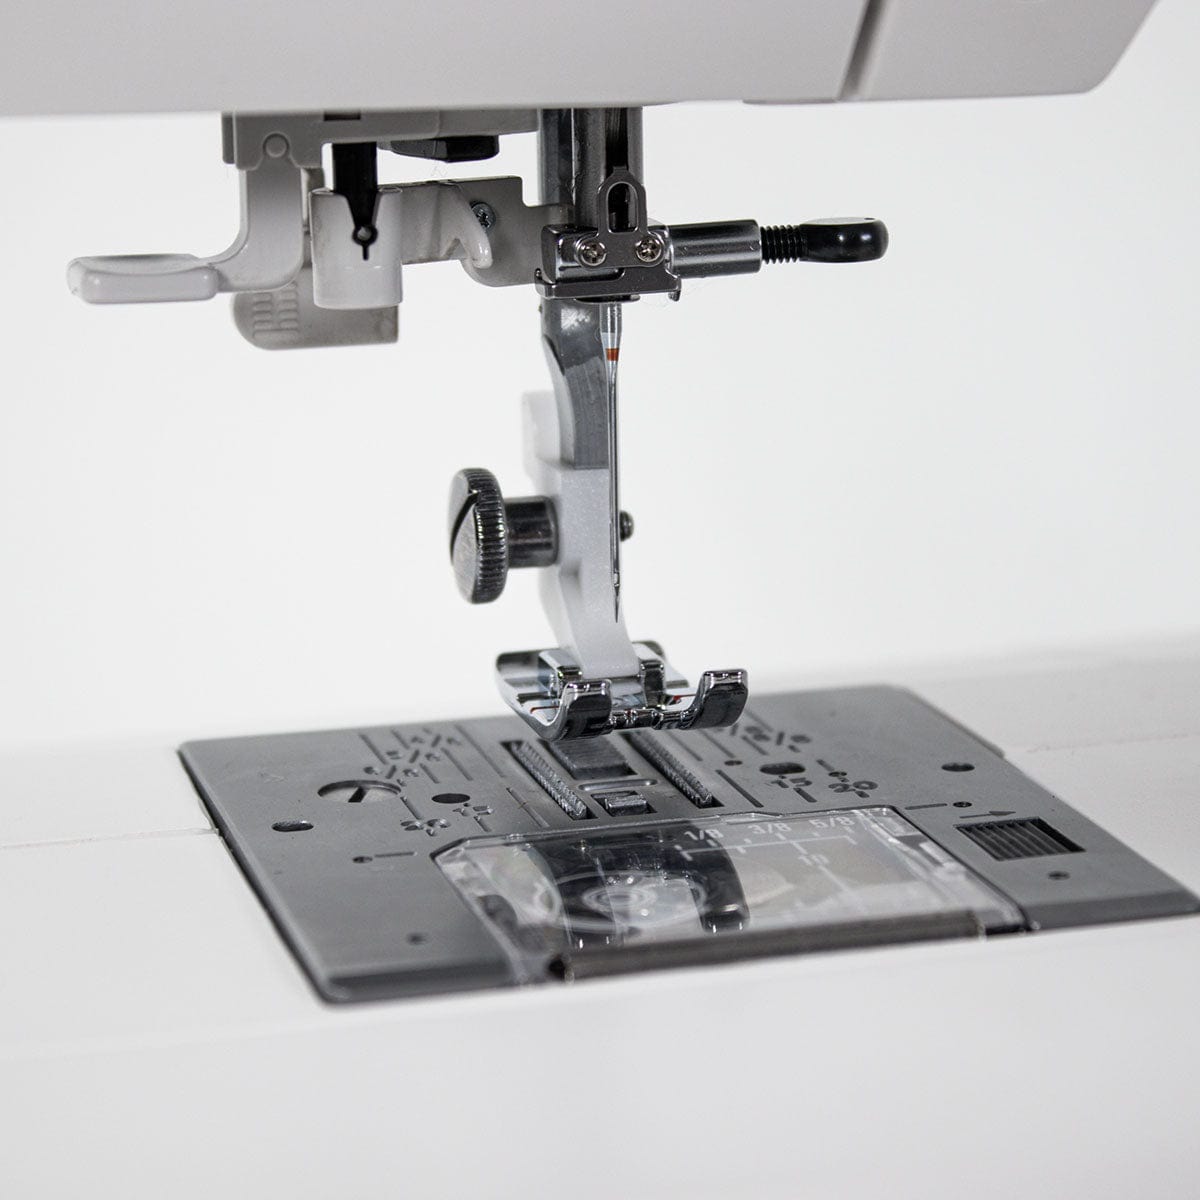 Husqvarna Emerald 118 Sewing Machine: Review & Shop